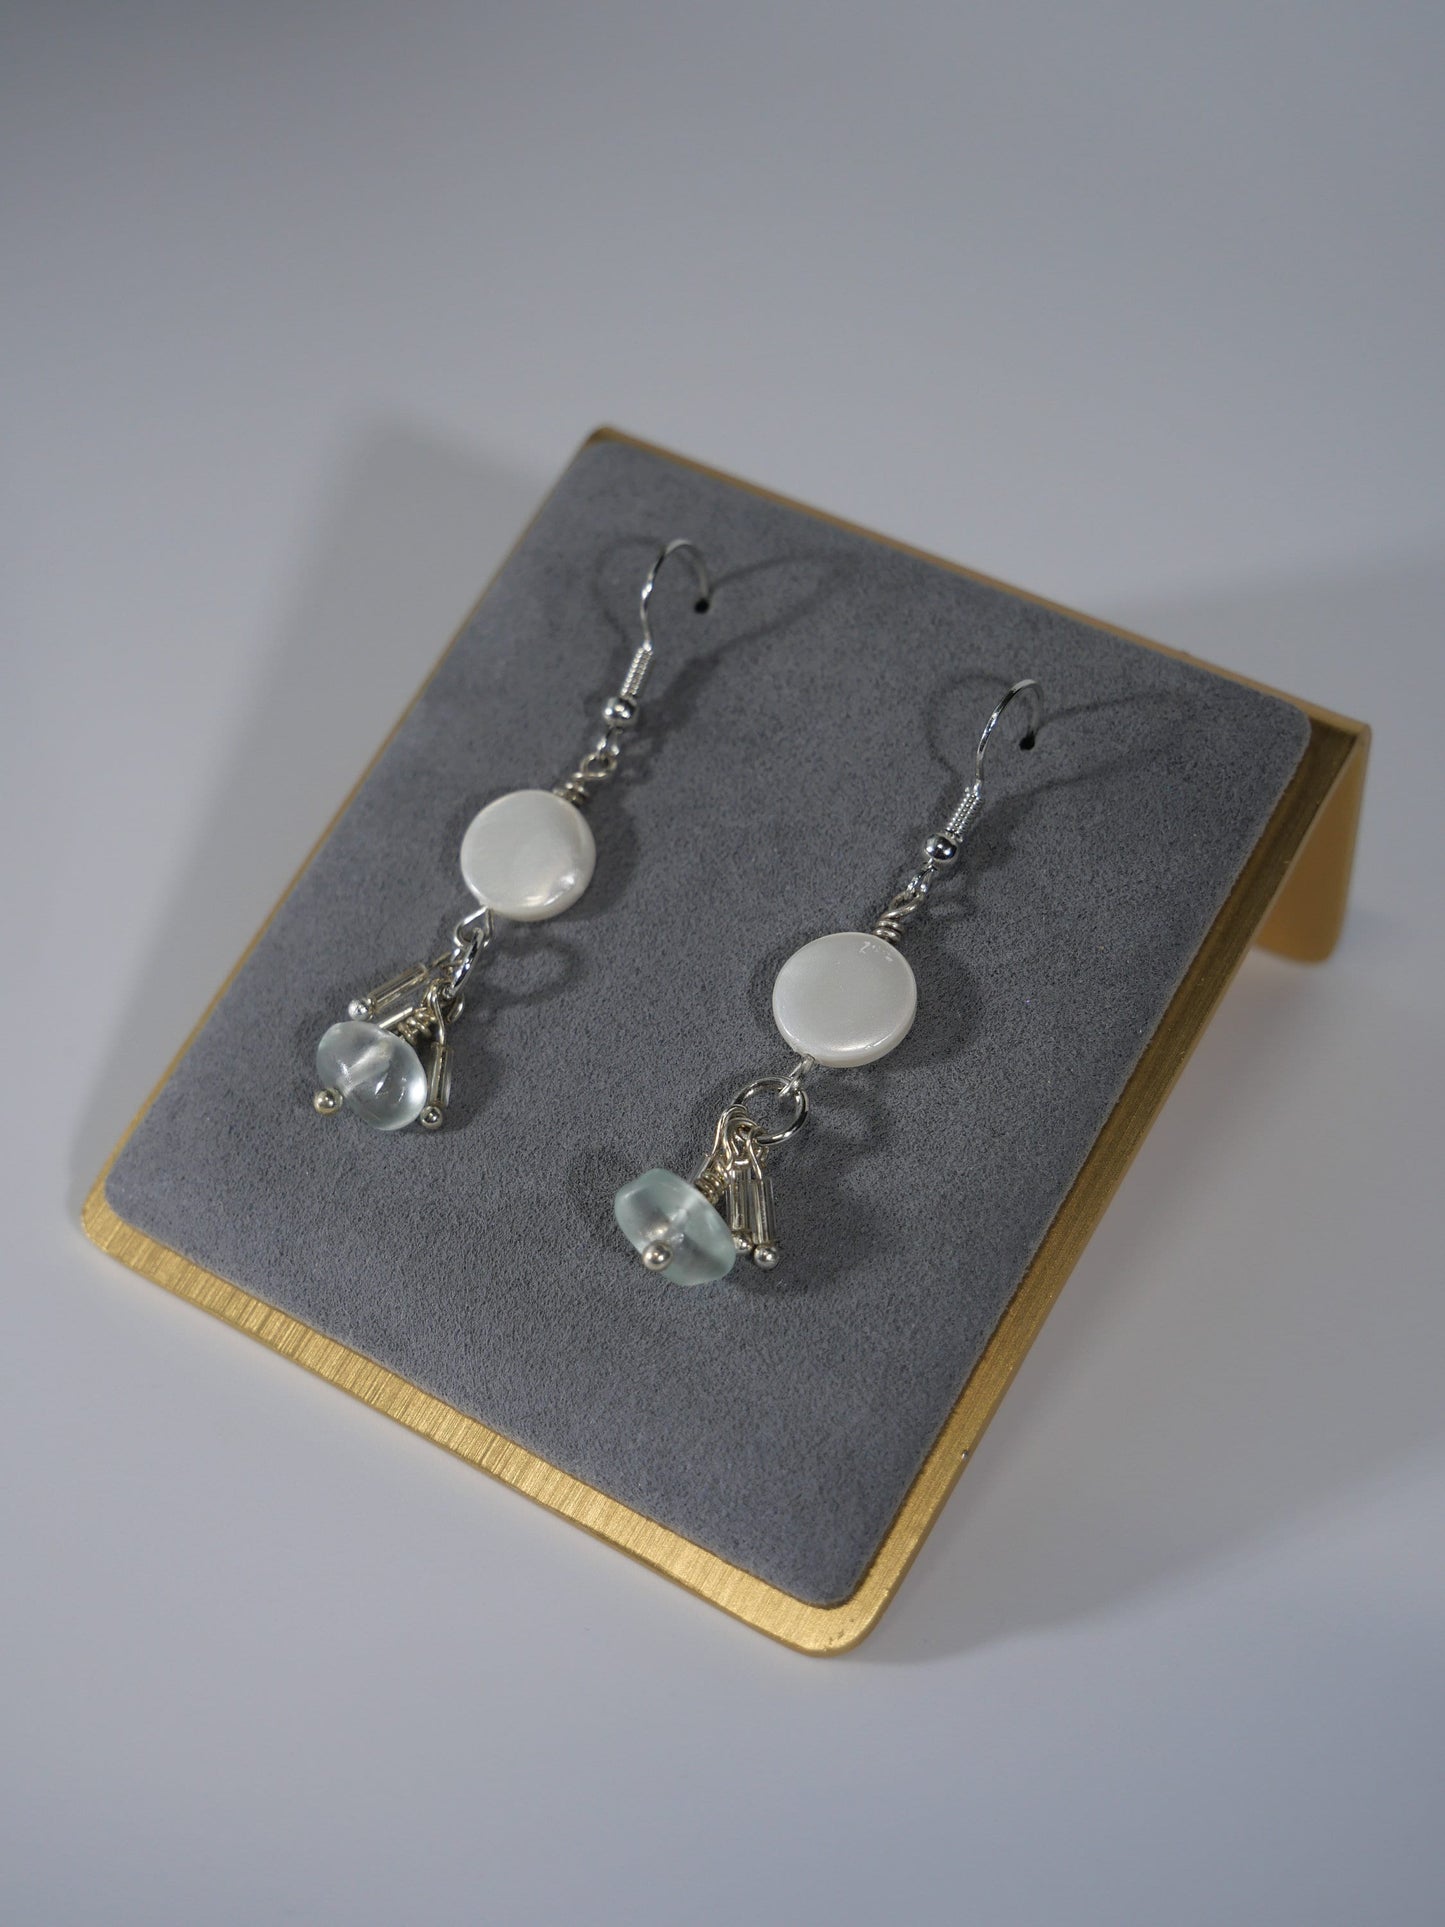 Silver, faux pearl & glass bead earrings, Coastal Earrings, Hand Made Earrings. Made in Maine